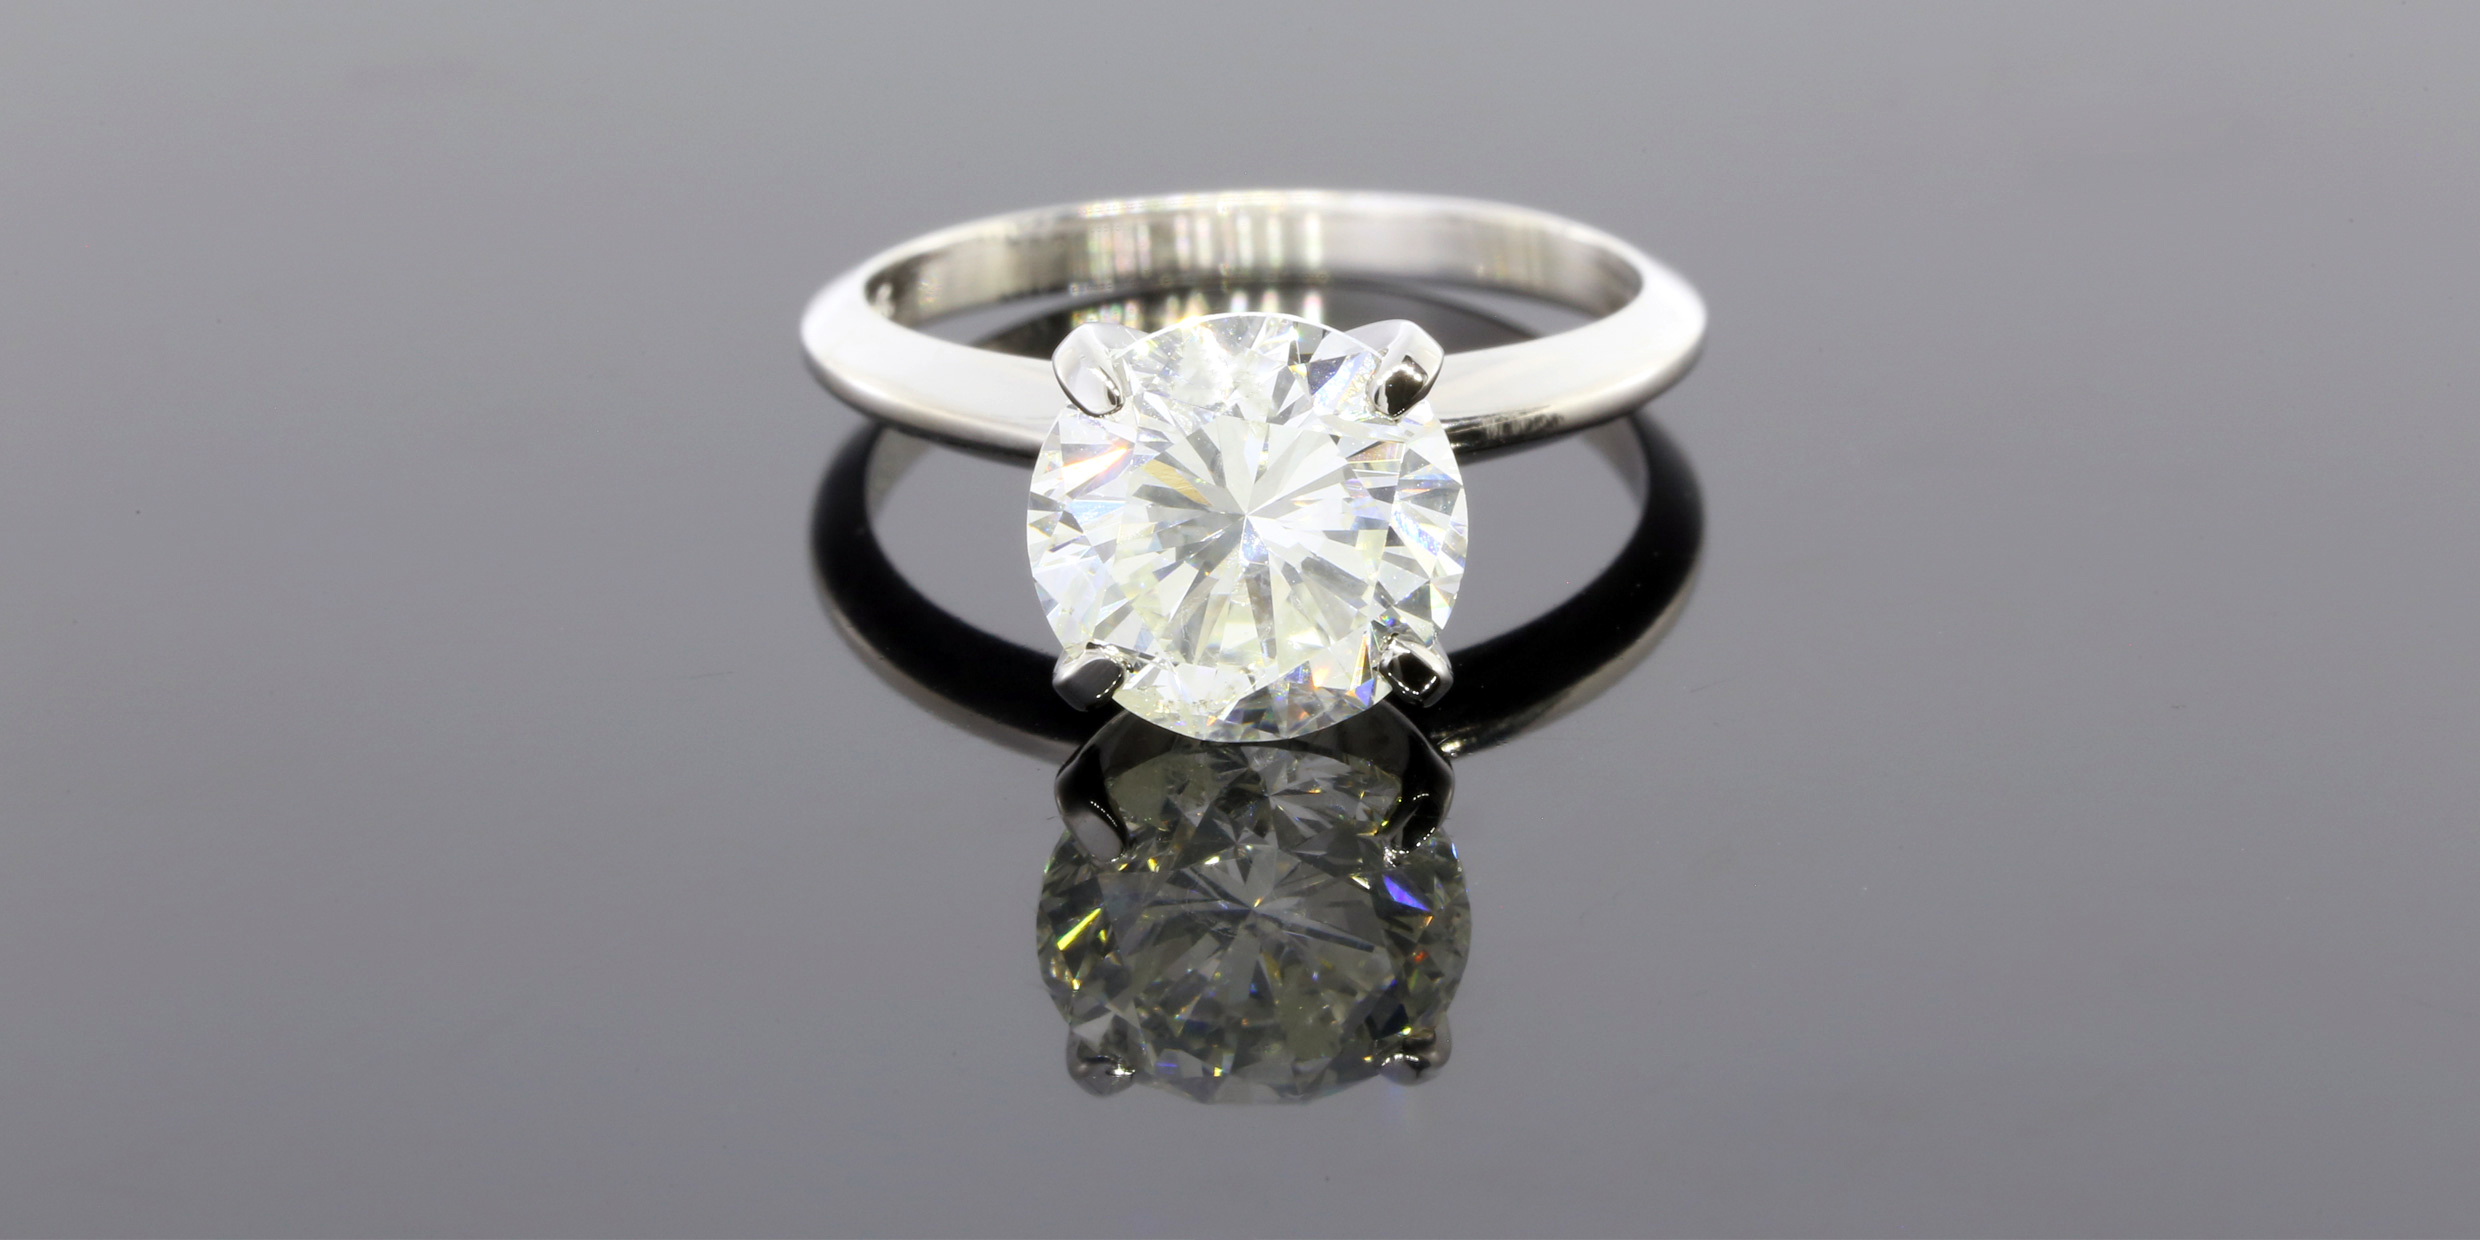 A customer borrowed $10,000 against this three carat average quality round cut diamond.